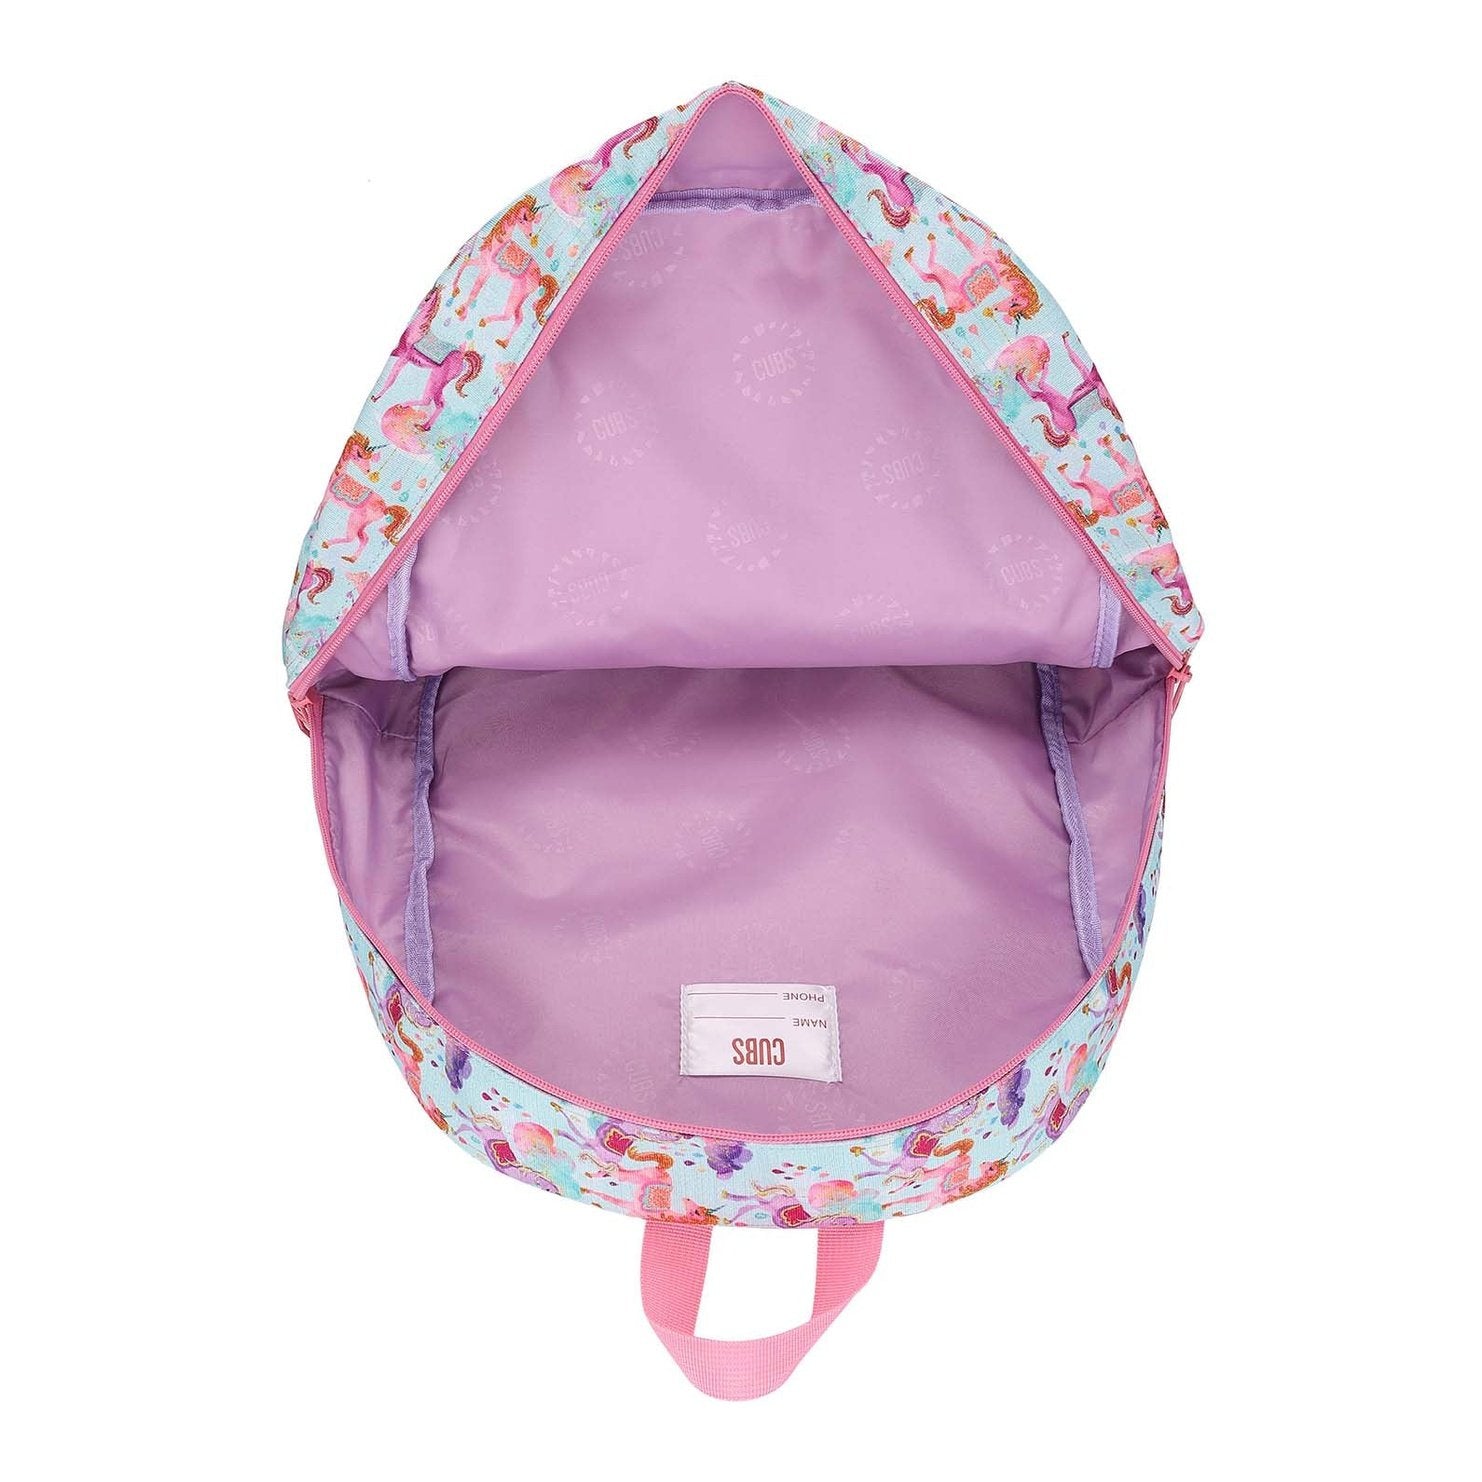 Shiny Fabric Baby Blue Backpack